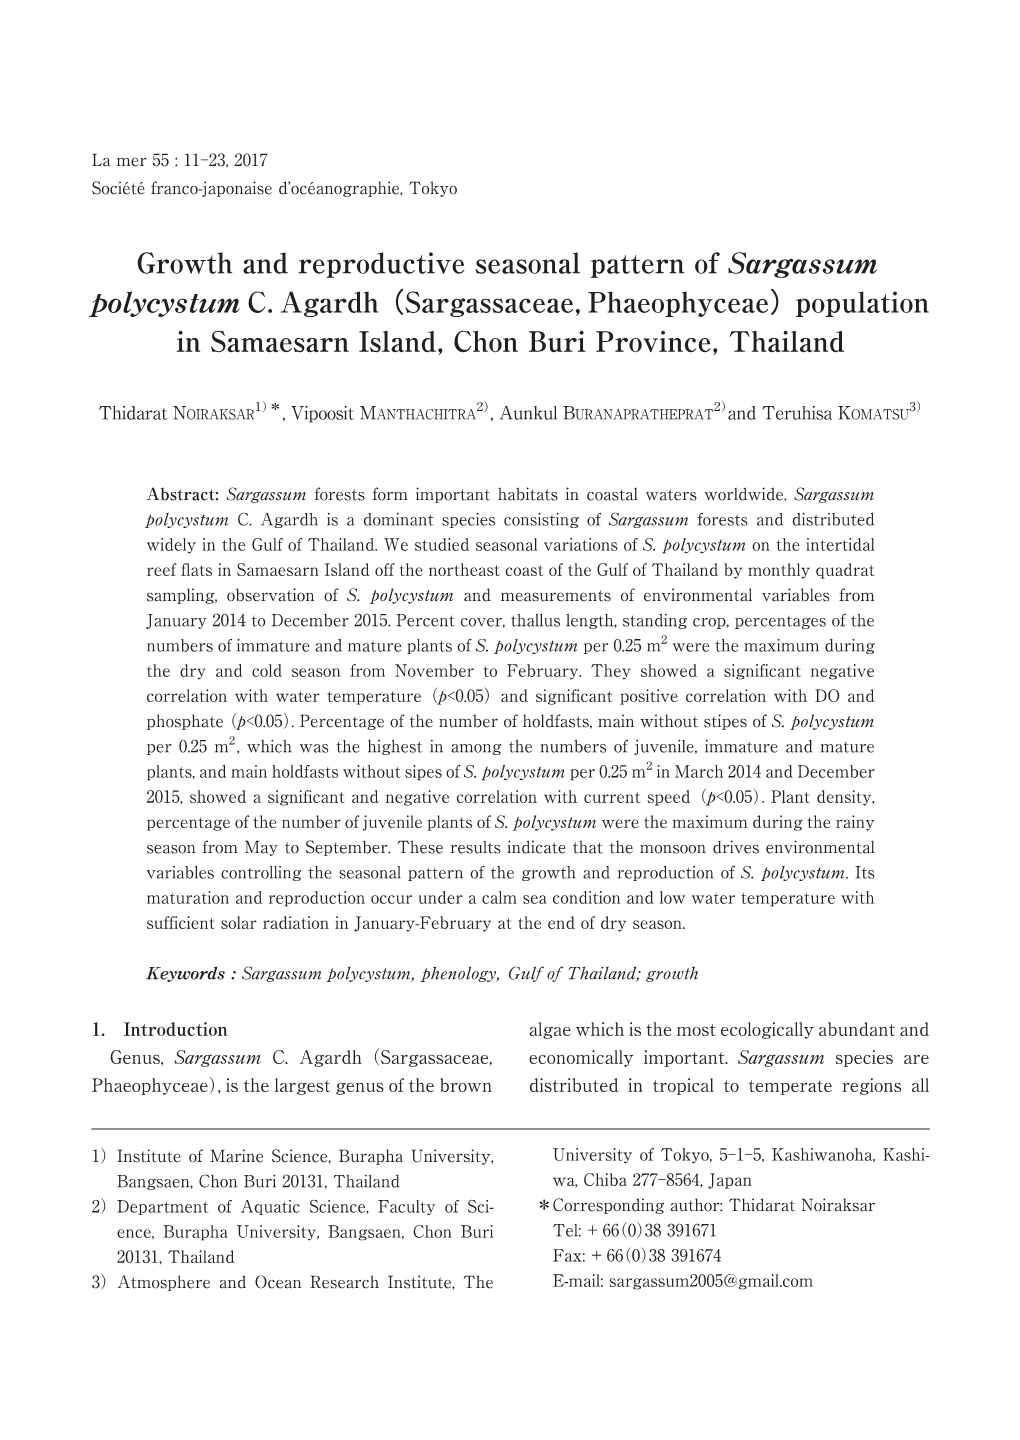 Growth and Reproductive Seasonal Pattern of Sargassum Polycystum C